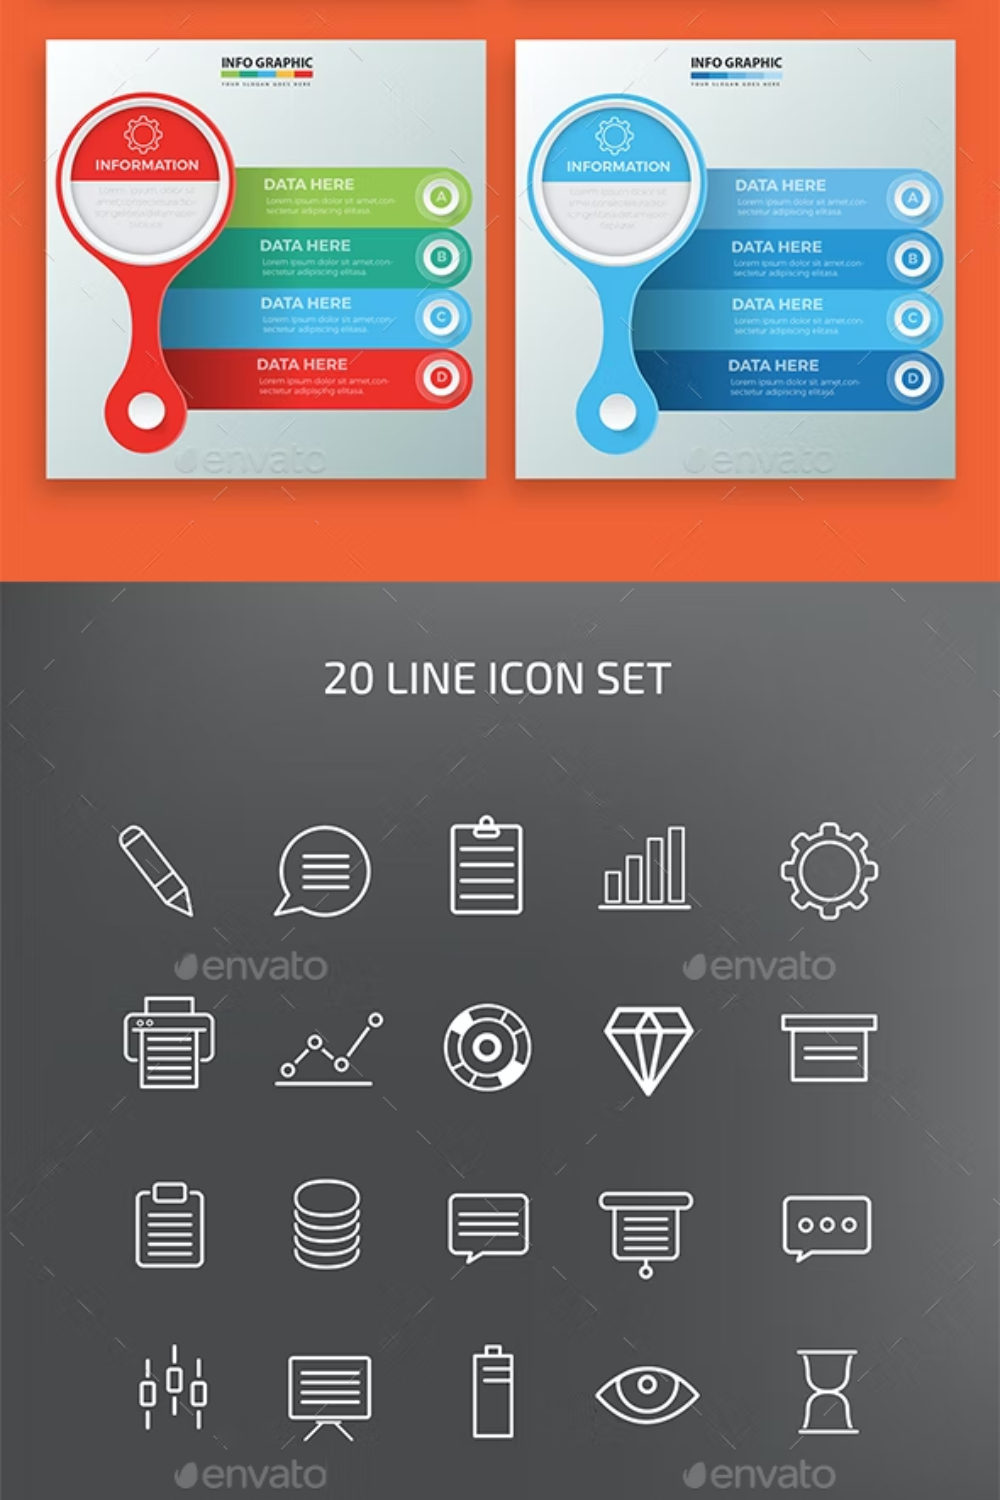 Infographic Design Pinterest Cover.